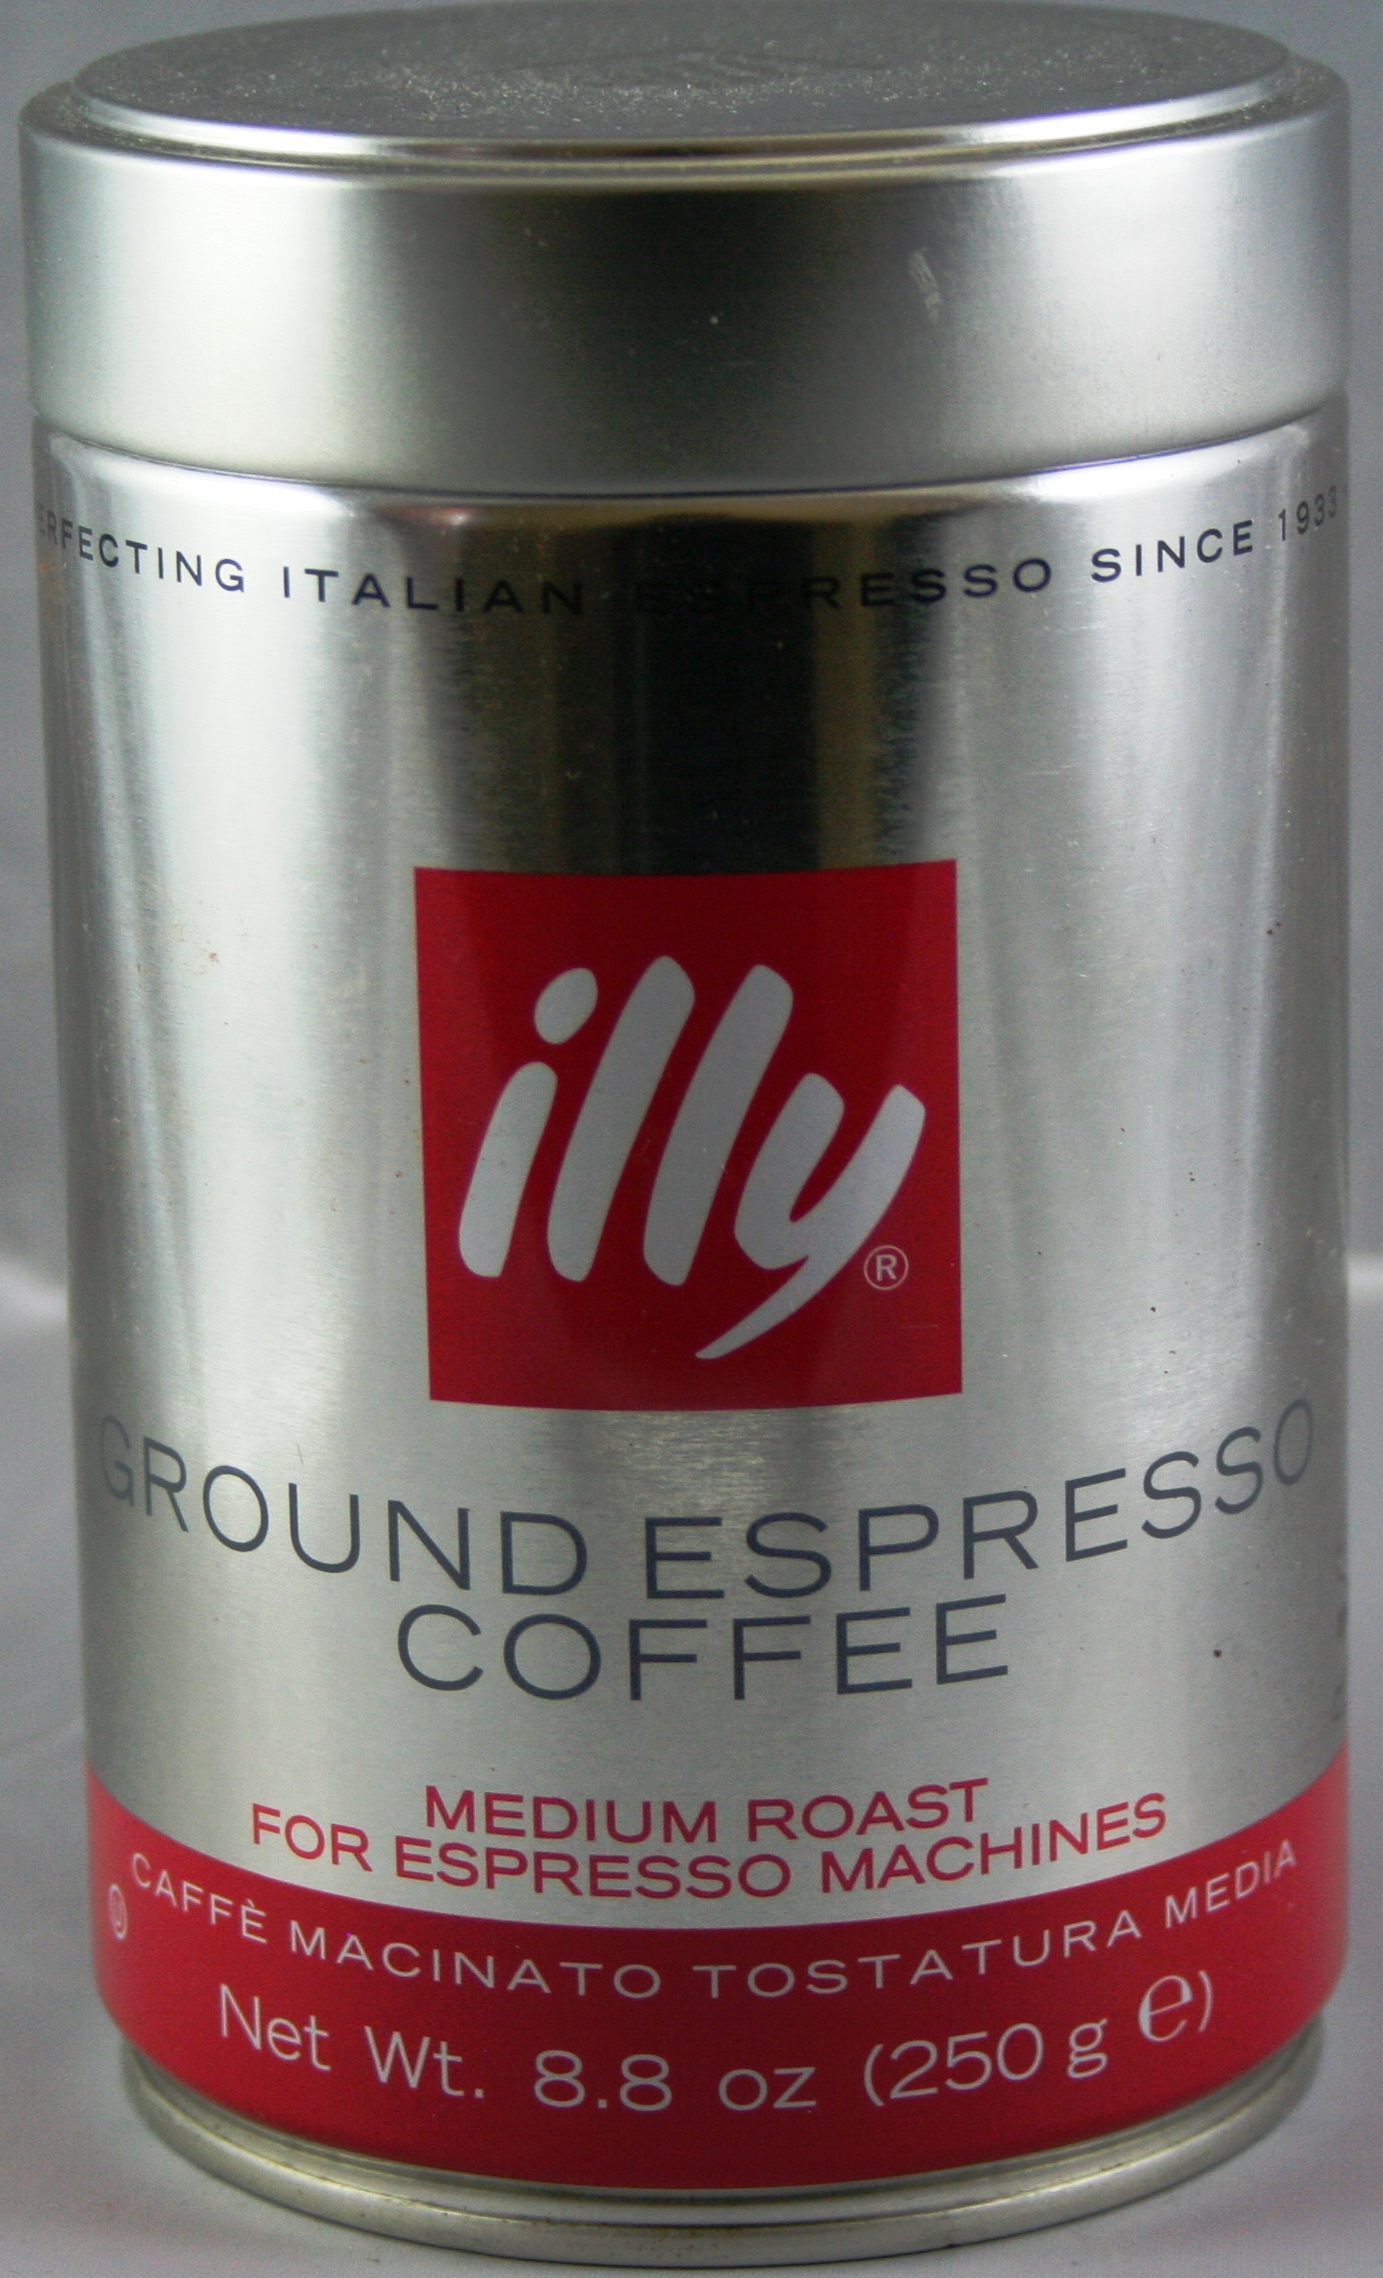 Illy Ground Espresso Coffee Medium Roast, Ground